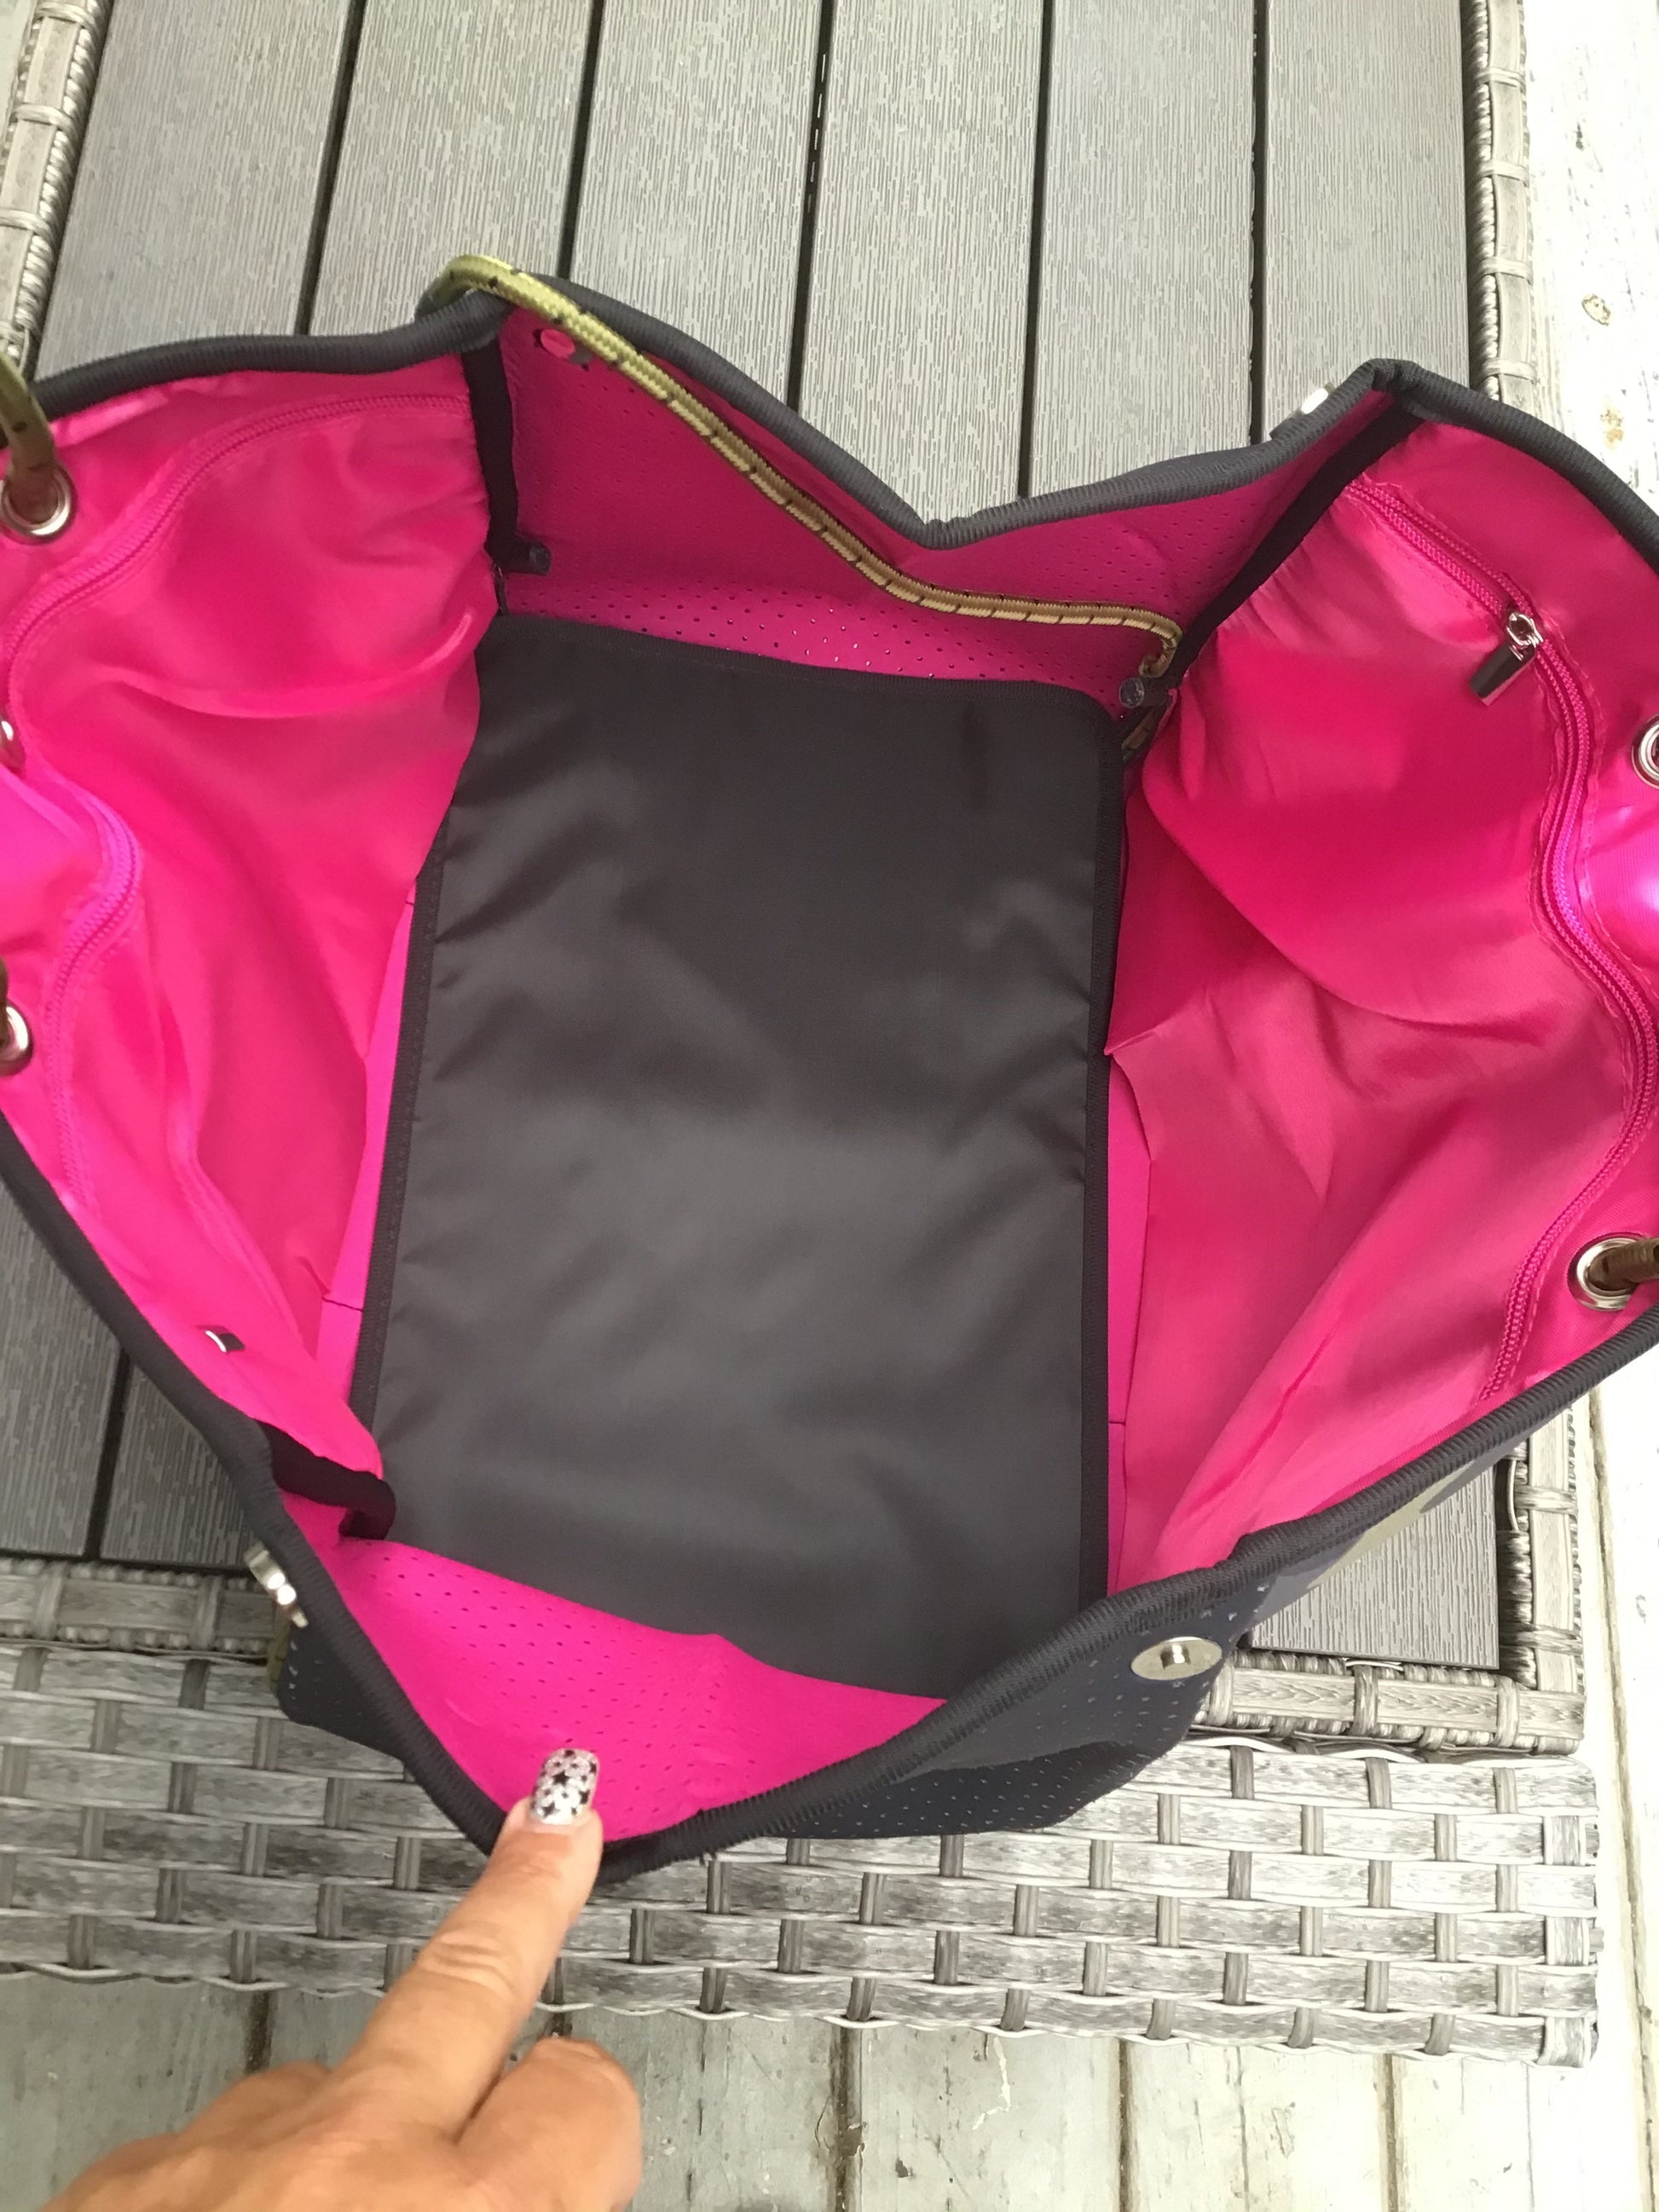 Green Camo with Neon Orange/Pink Stripe Neoprene Tote bag 🧡💗 – Peace Love  Fashion